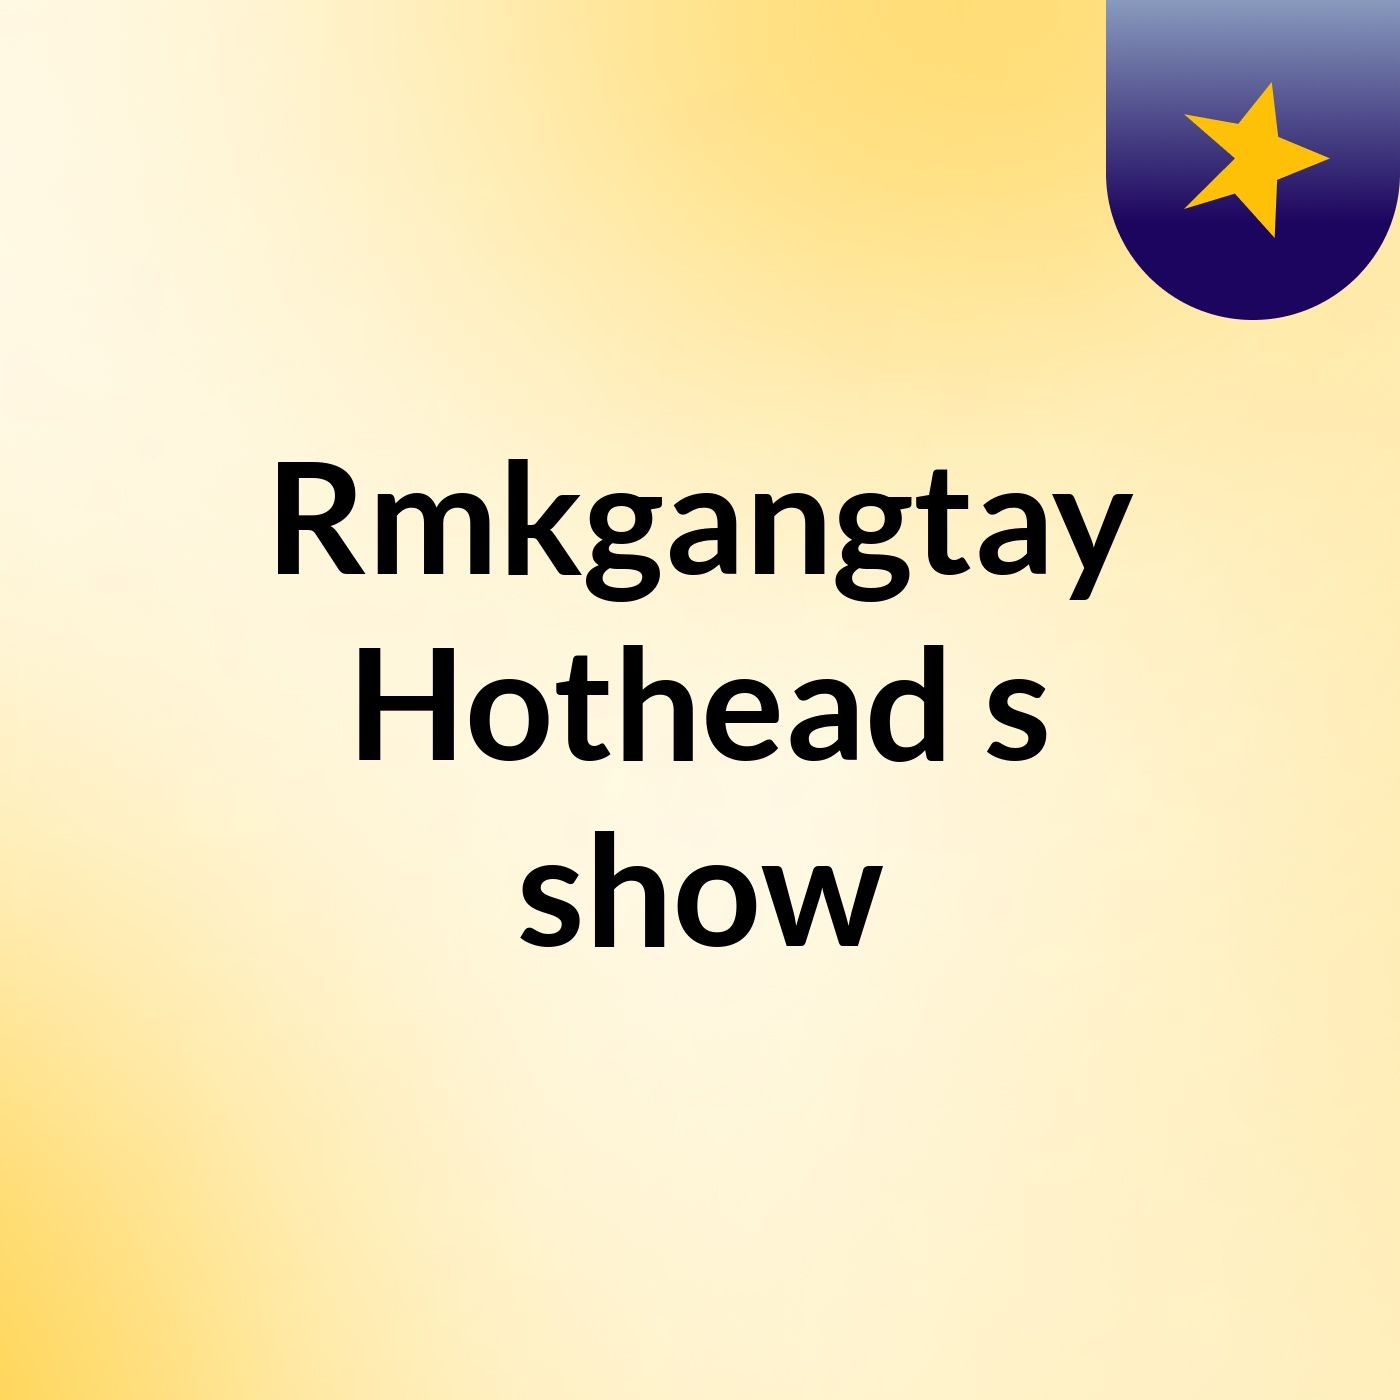 Rmkgangtay Hothead's show